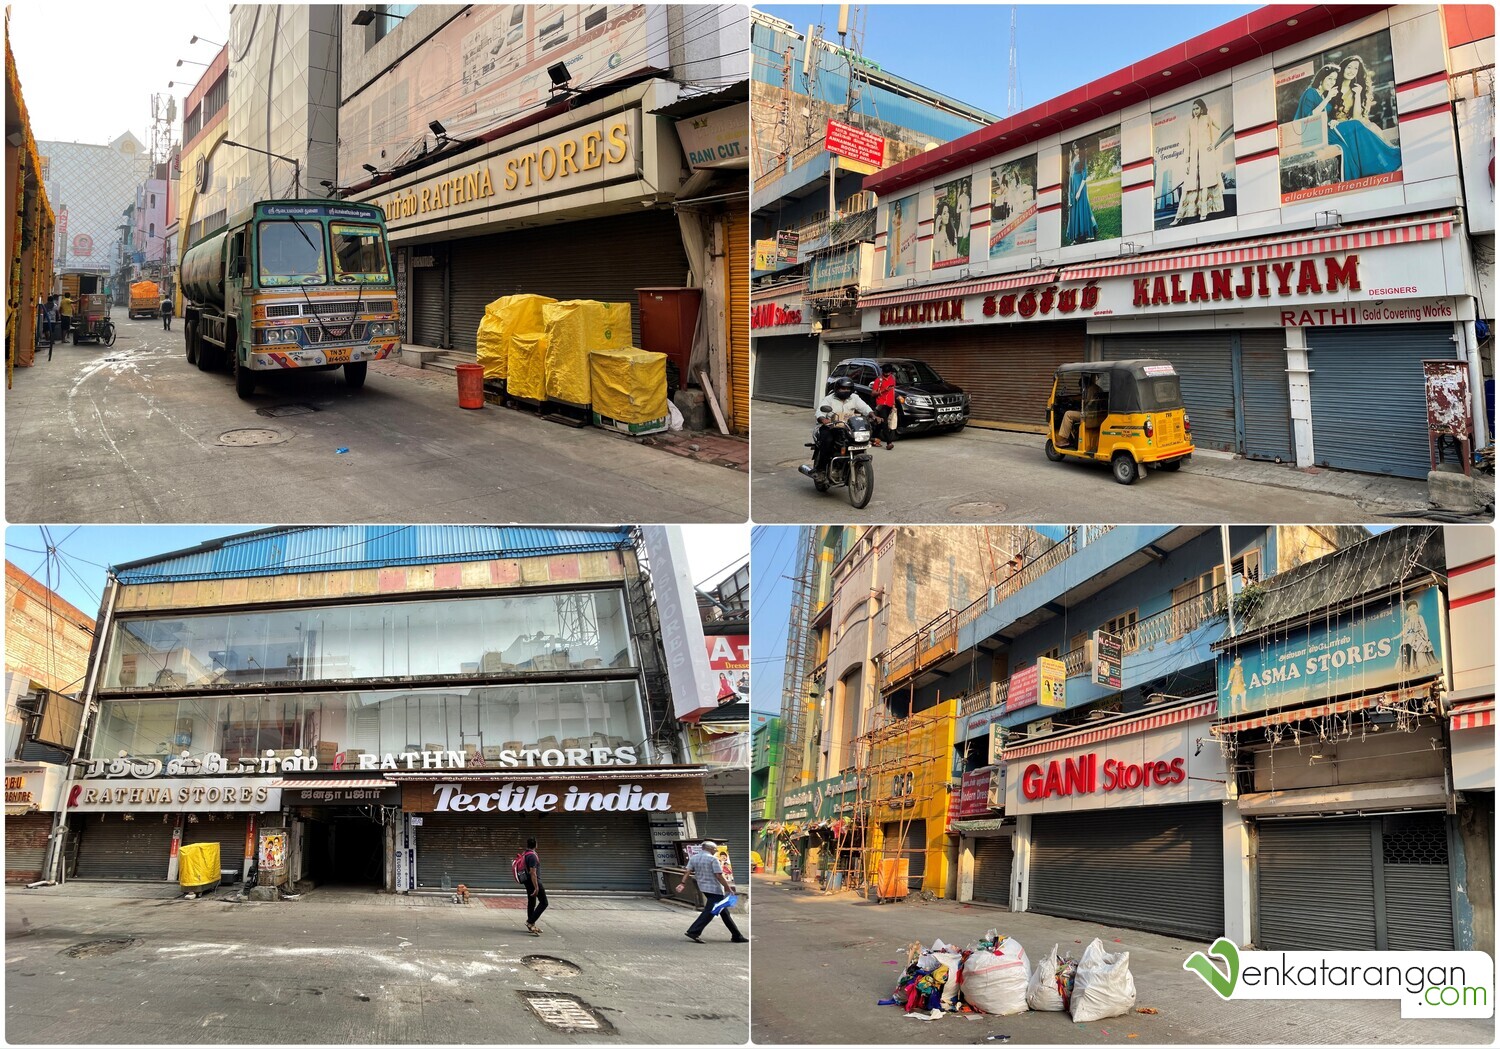 Other popular shops in the street - Rathna Stores, Gani Stores, Kalanjiyam